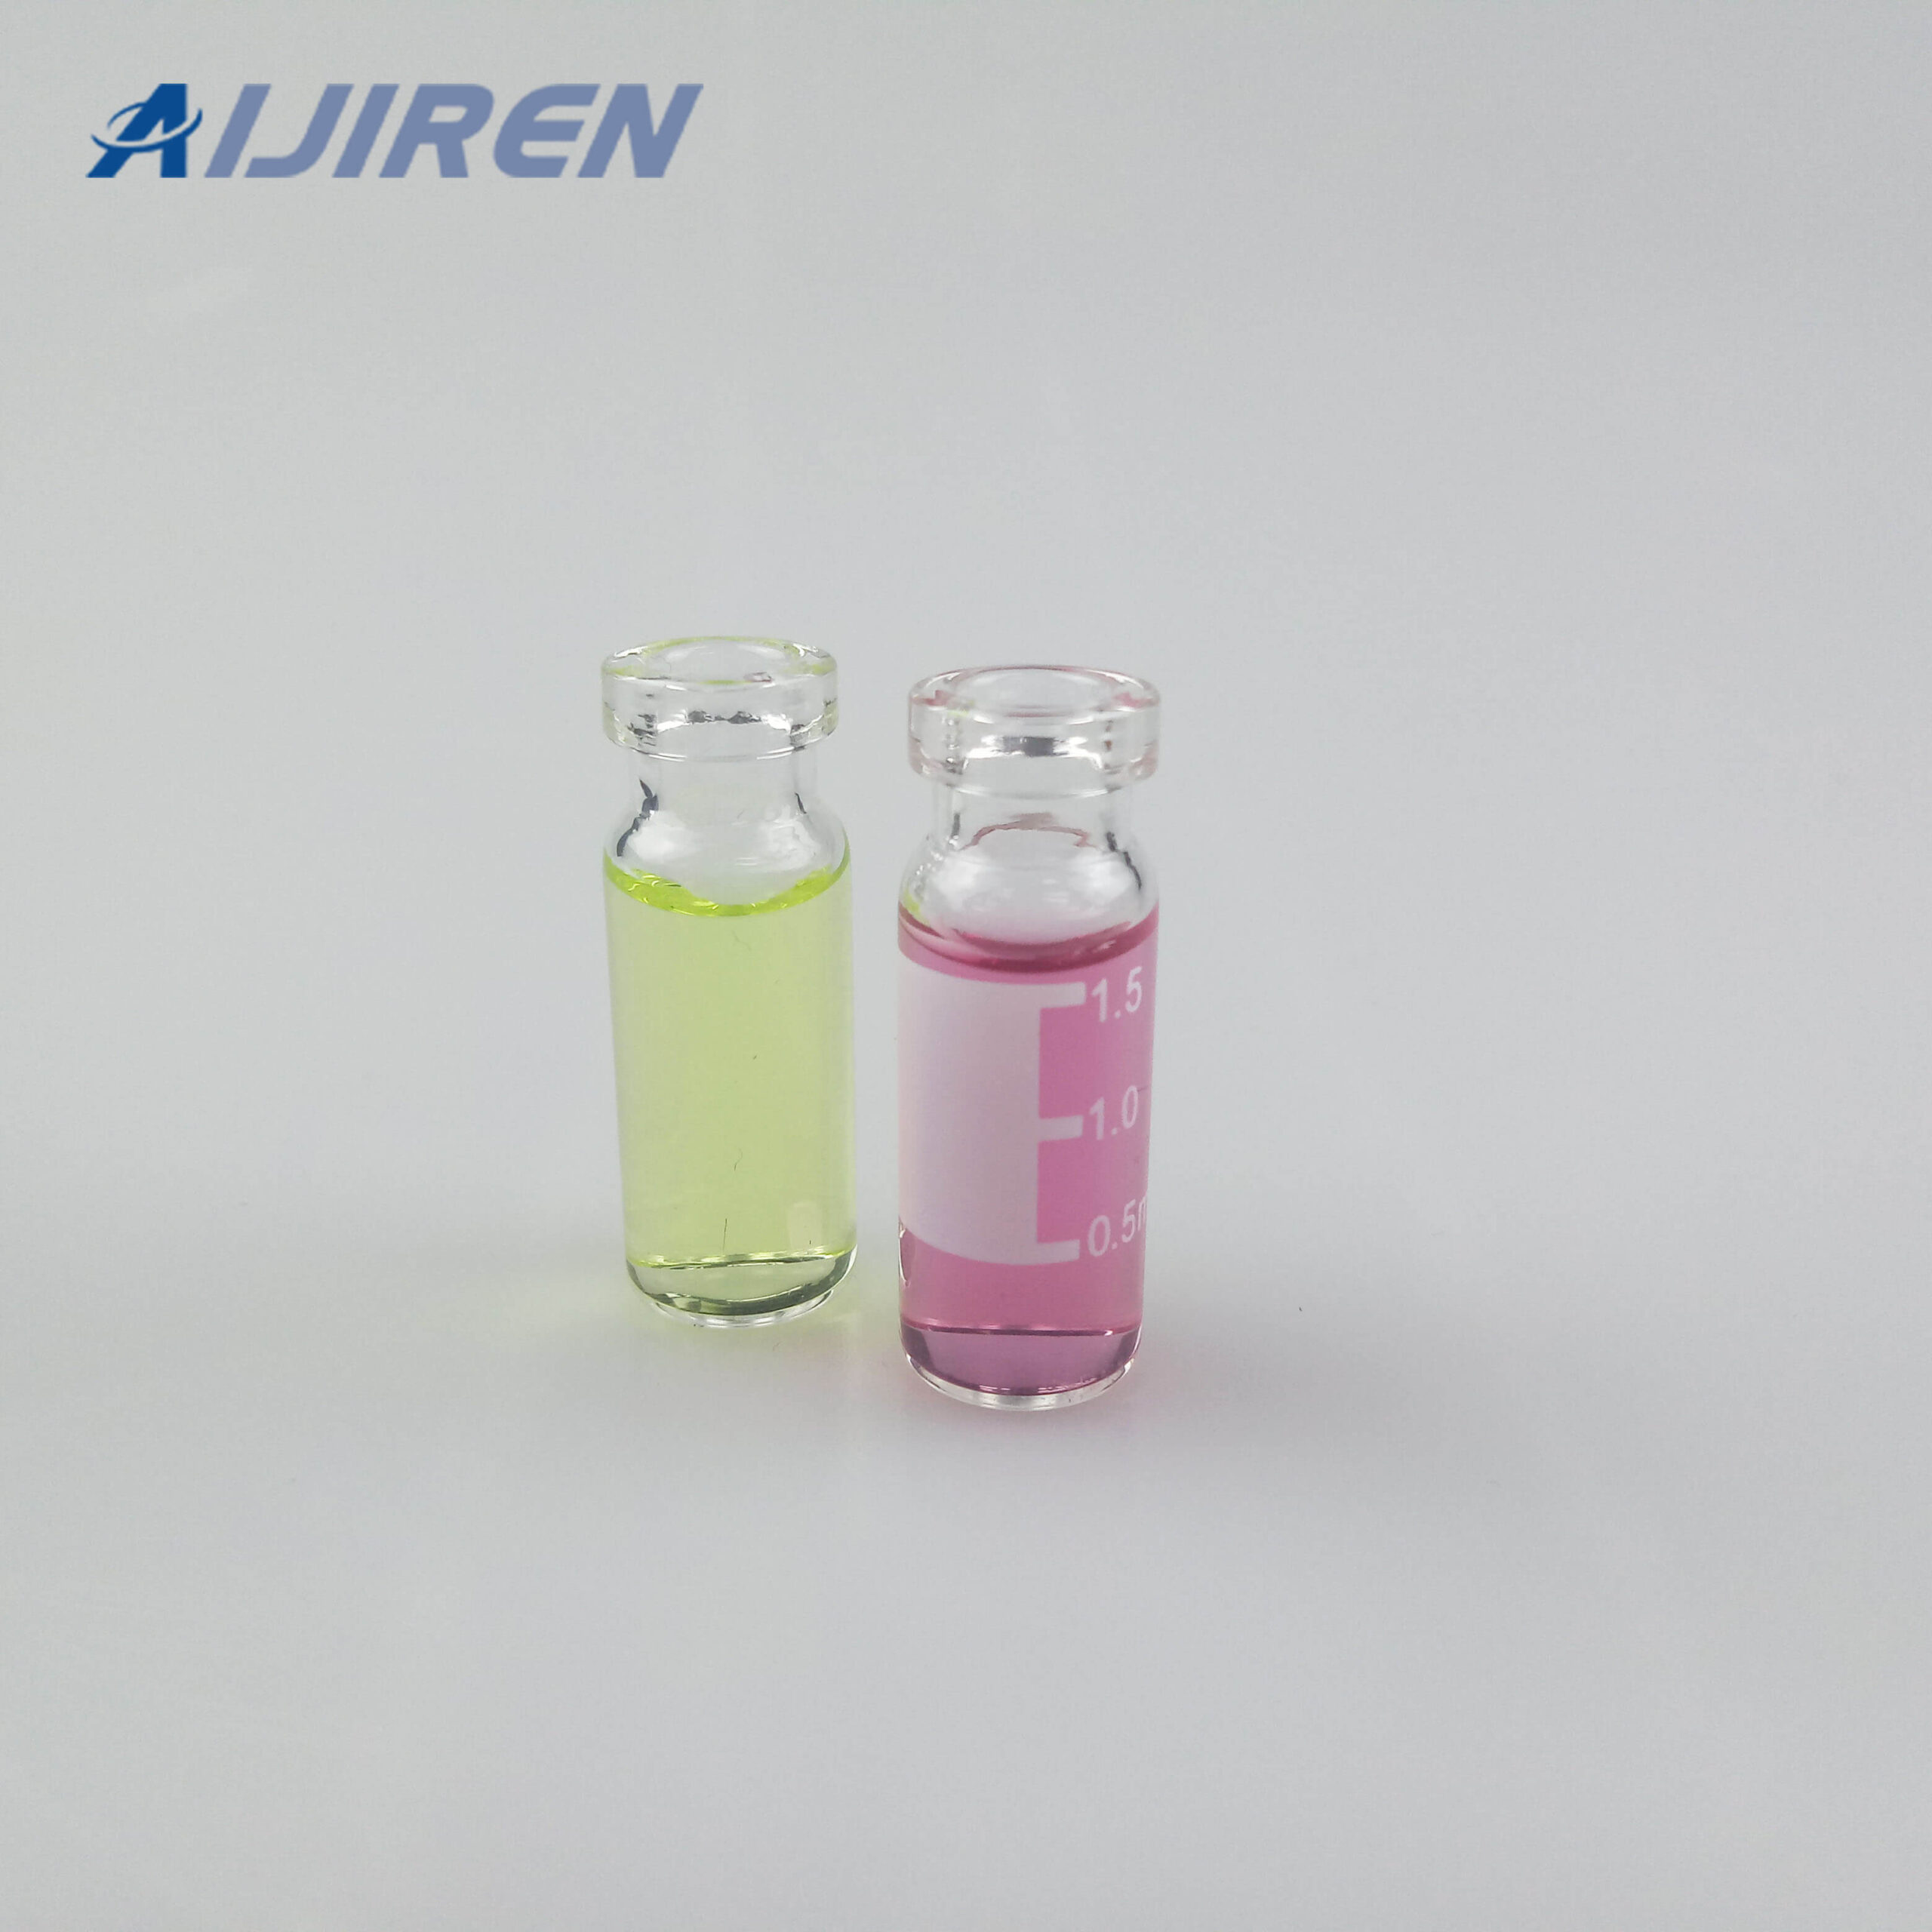 2ml Crimp Top Glass Vial suitable for Autosampler